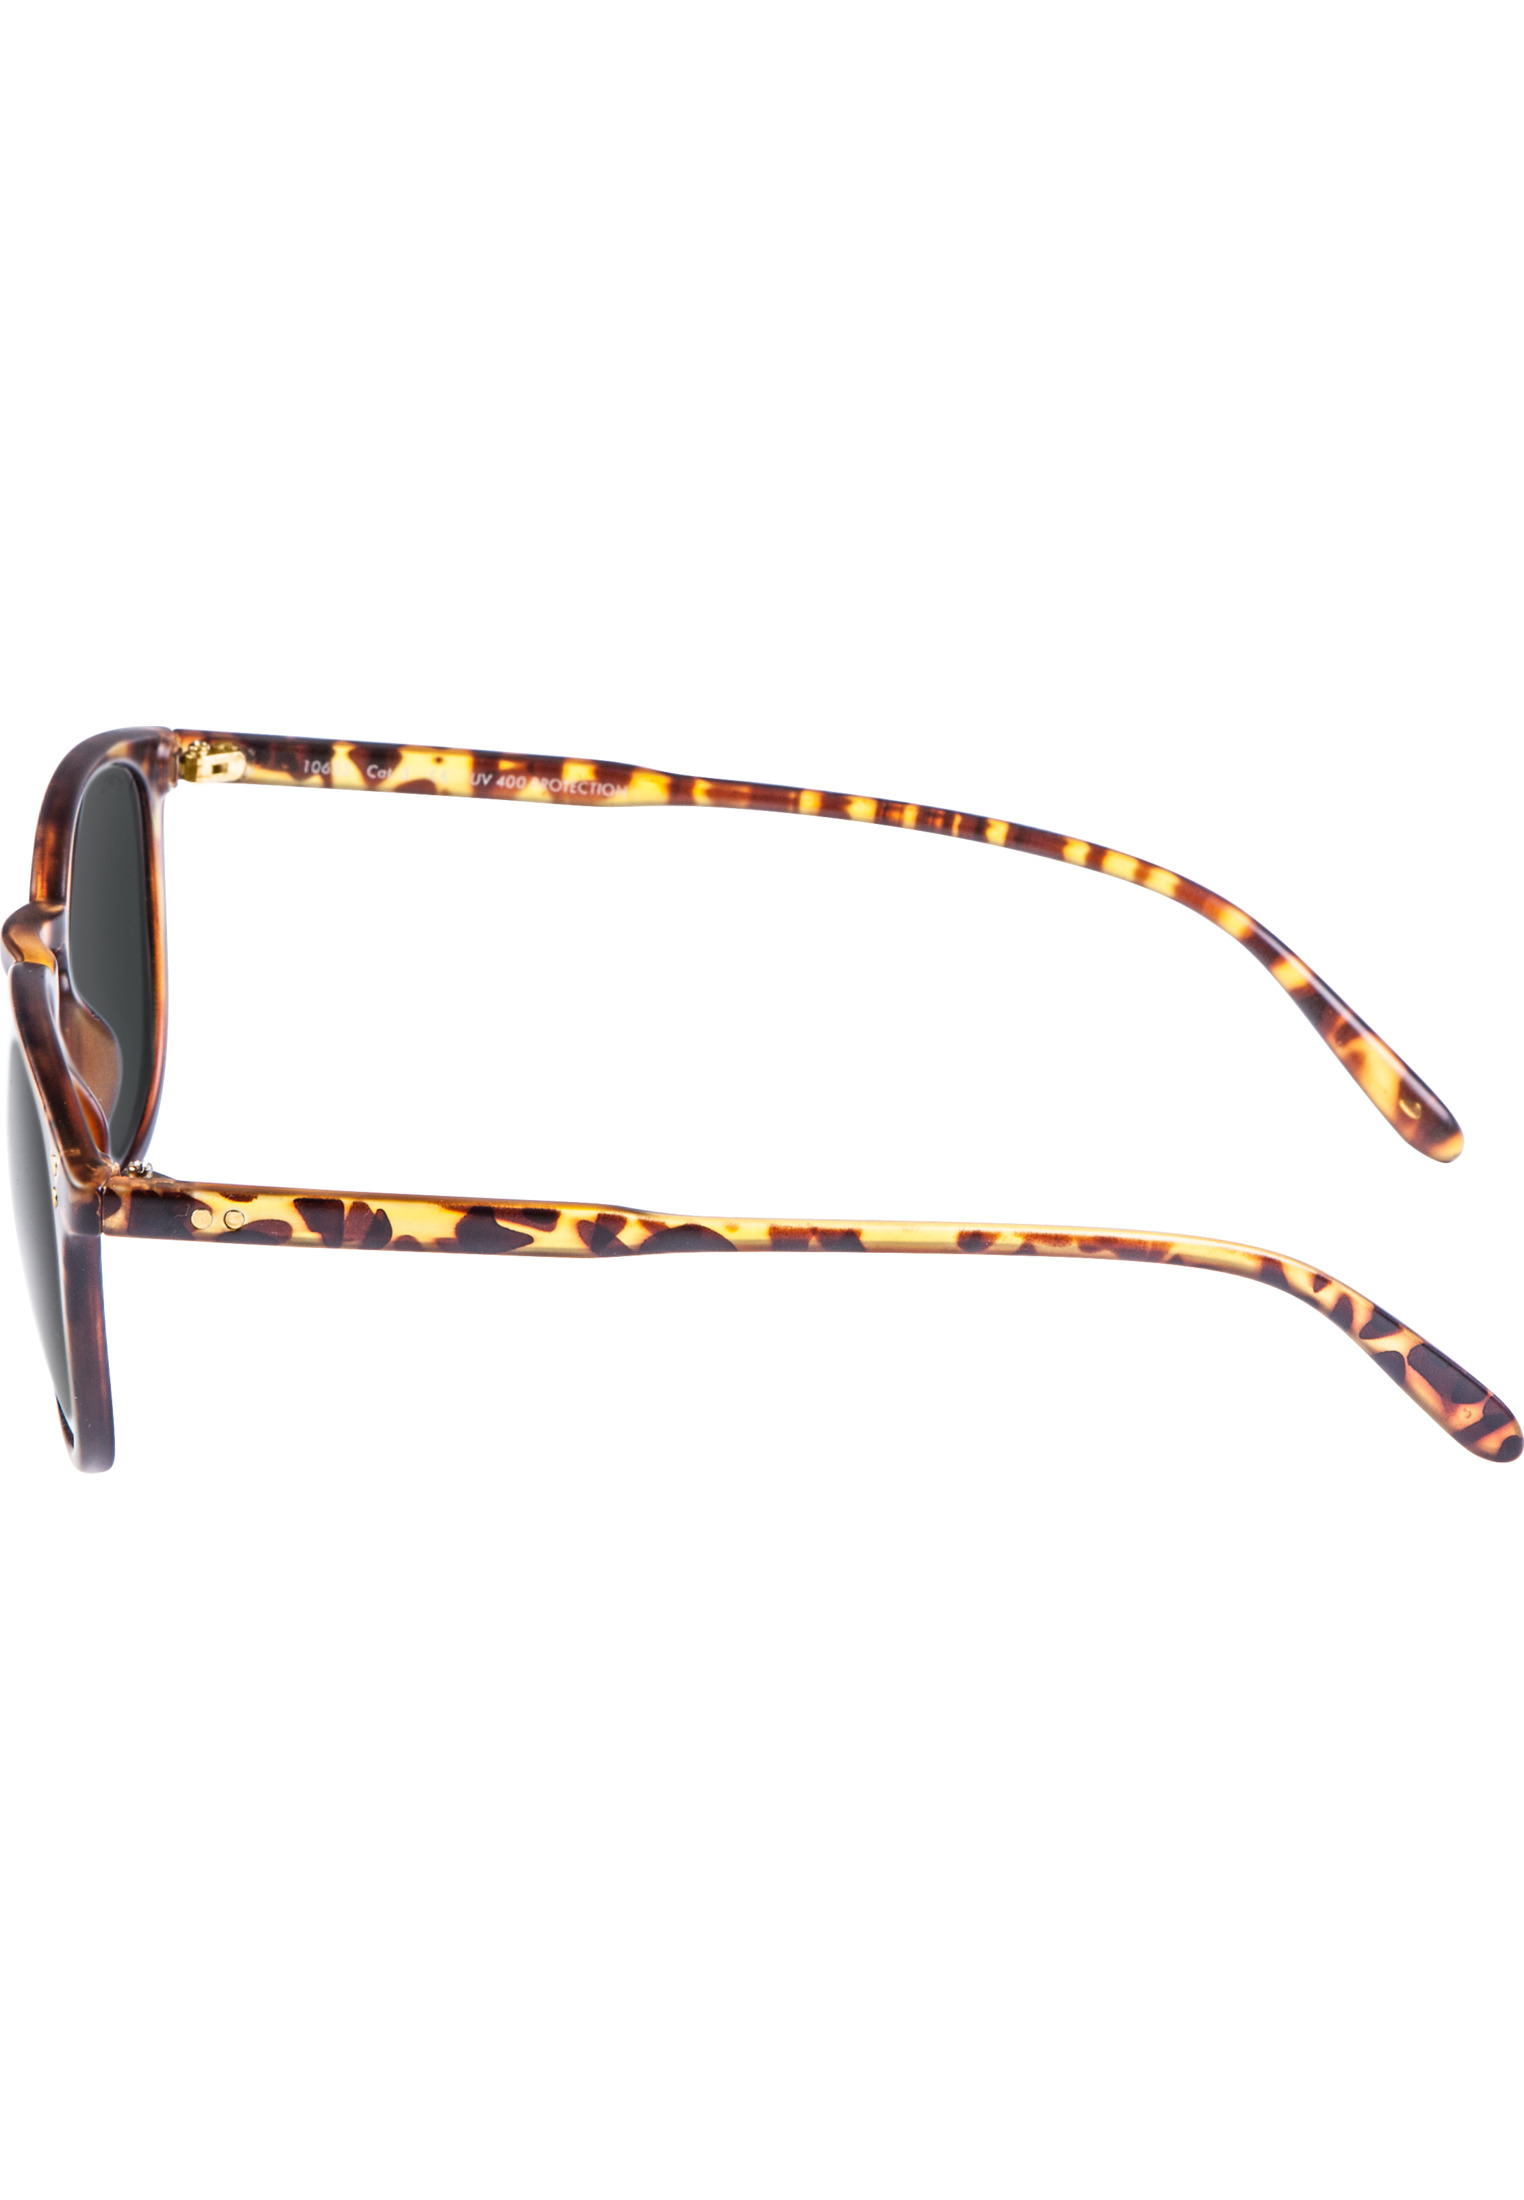 Sunglasses Arthur-10635